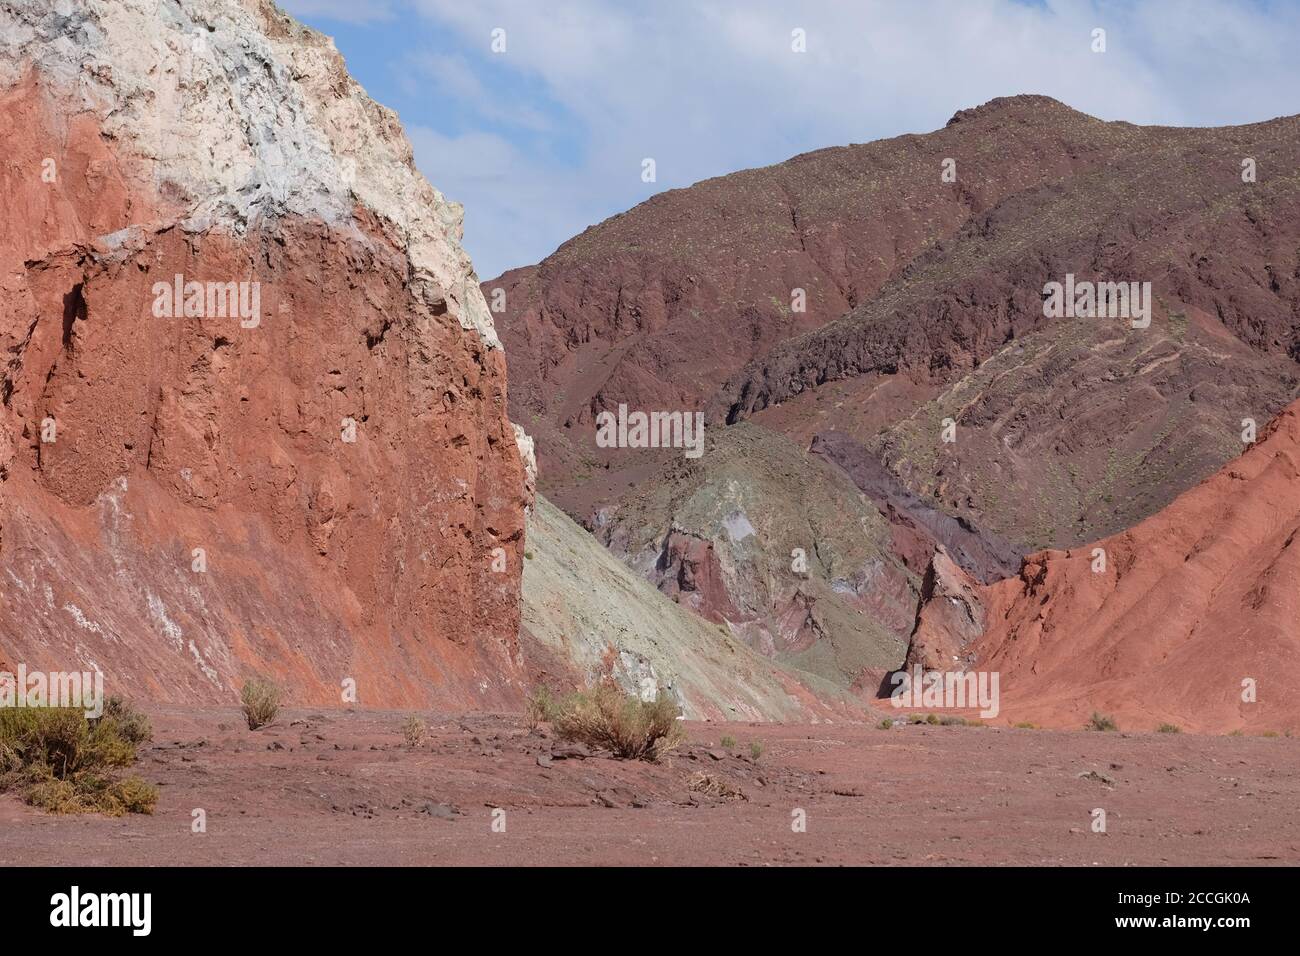 Valle del Arcoiris - Rainbow Valley - high in the Atacama Desert has a delightfully colourful palette of rocks. Stock Photo